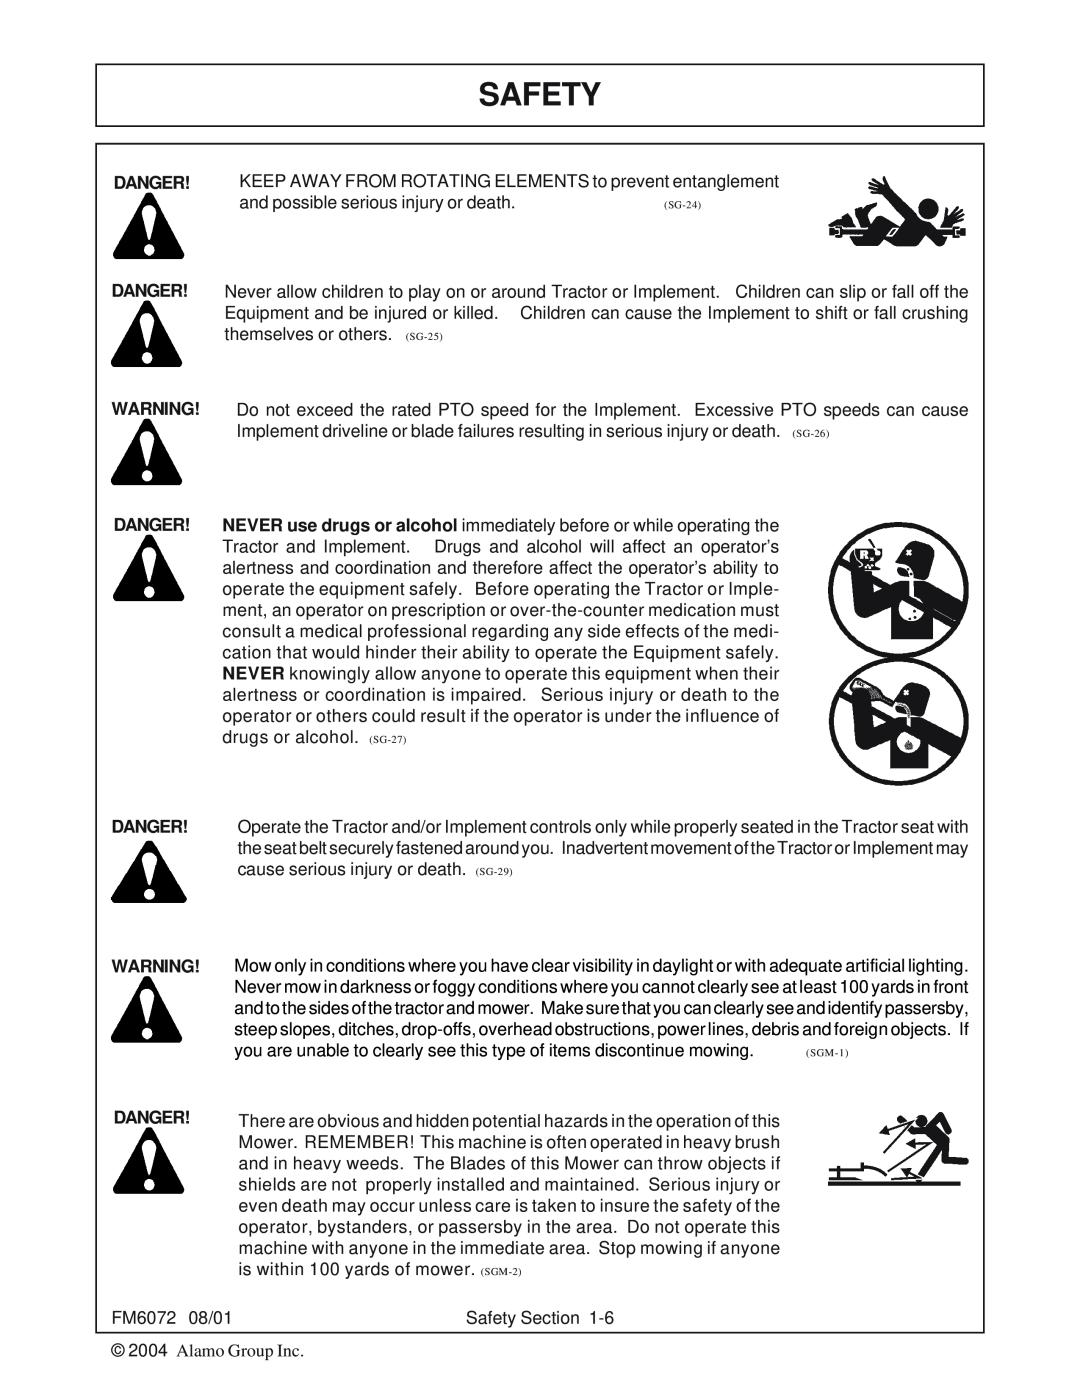 Servis-Rhino FM60/72 manual Safety, Danger 